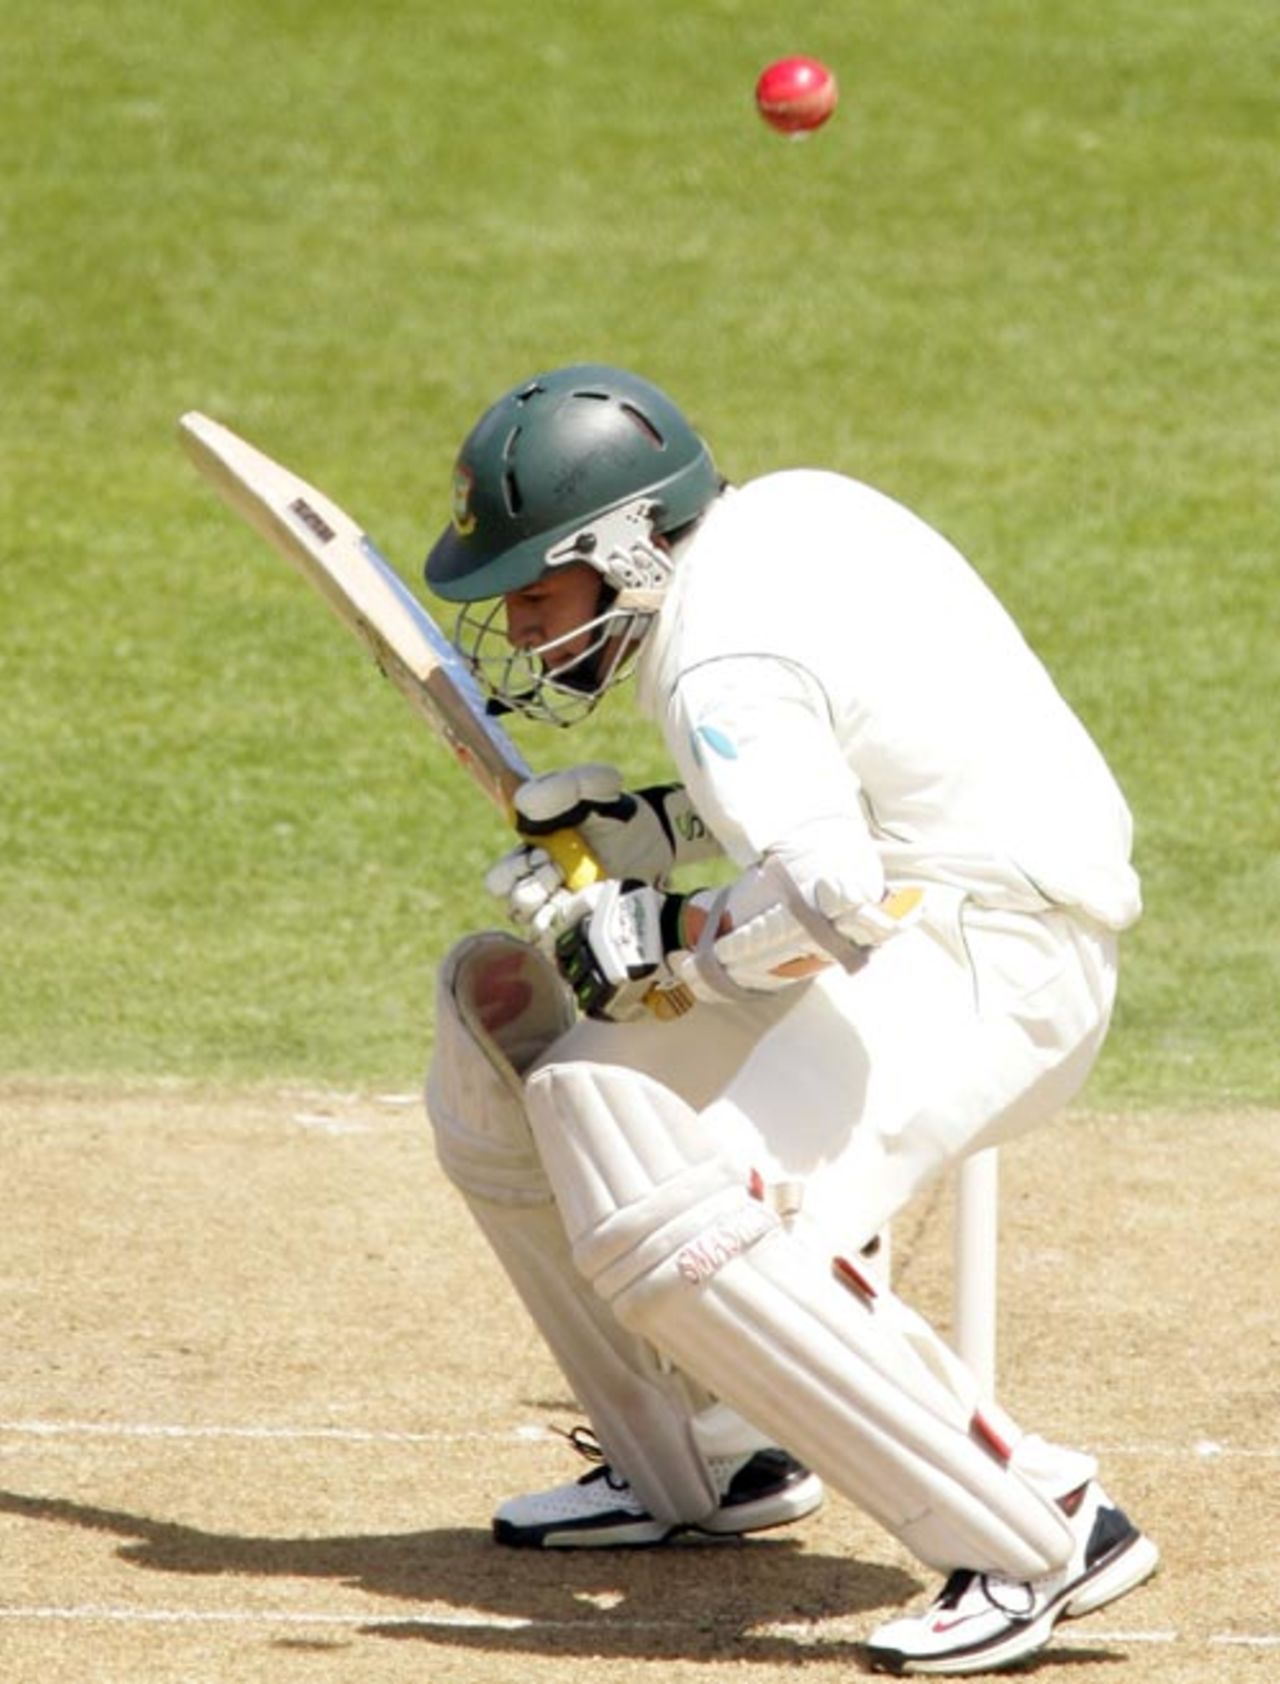 Mushfiqur Rahim ducks under a bouncer, New Zealand v Bangladesh, 1st Test, Dunedin, 1st day, January 4, 2008